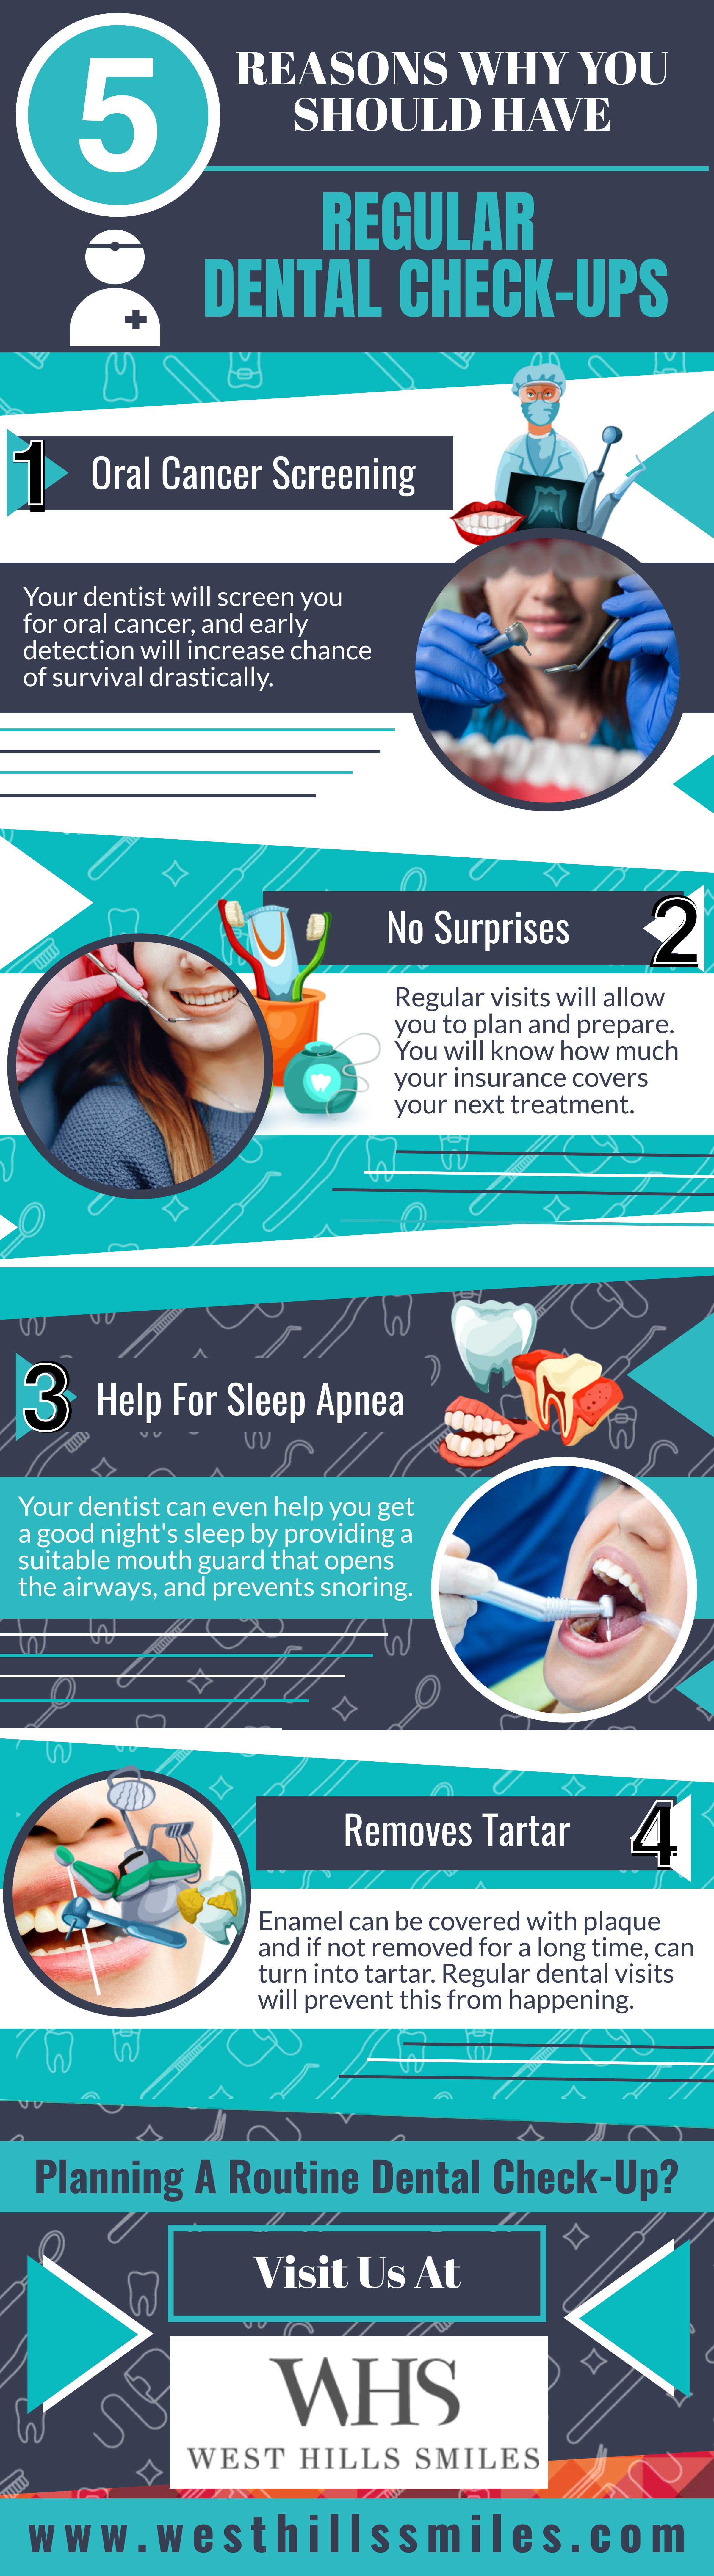 5 Reasons for Regular Dental Check-Ups